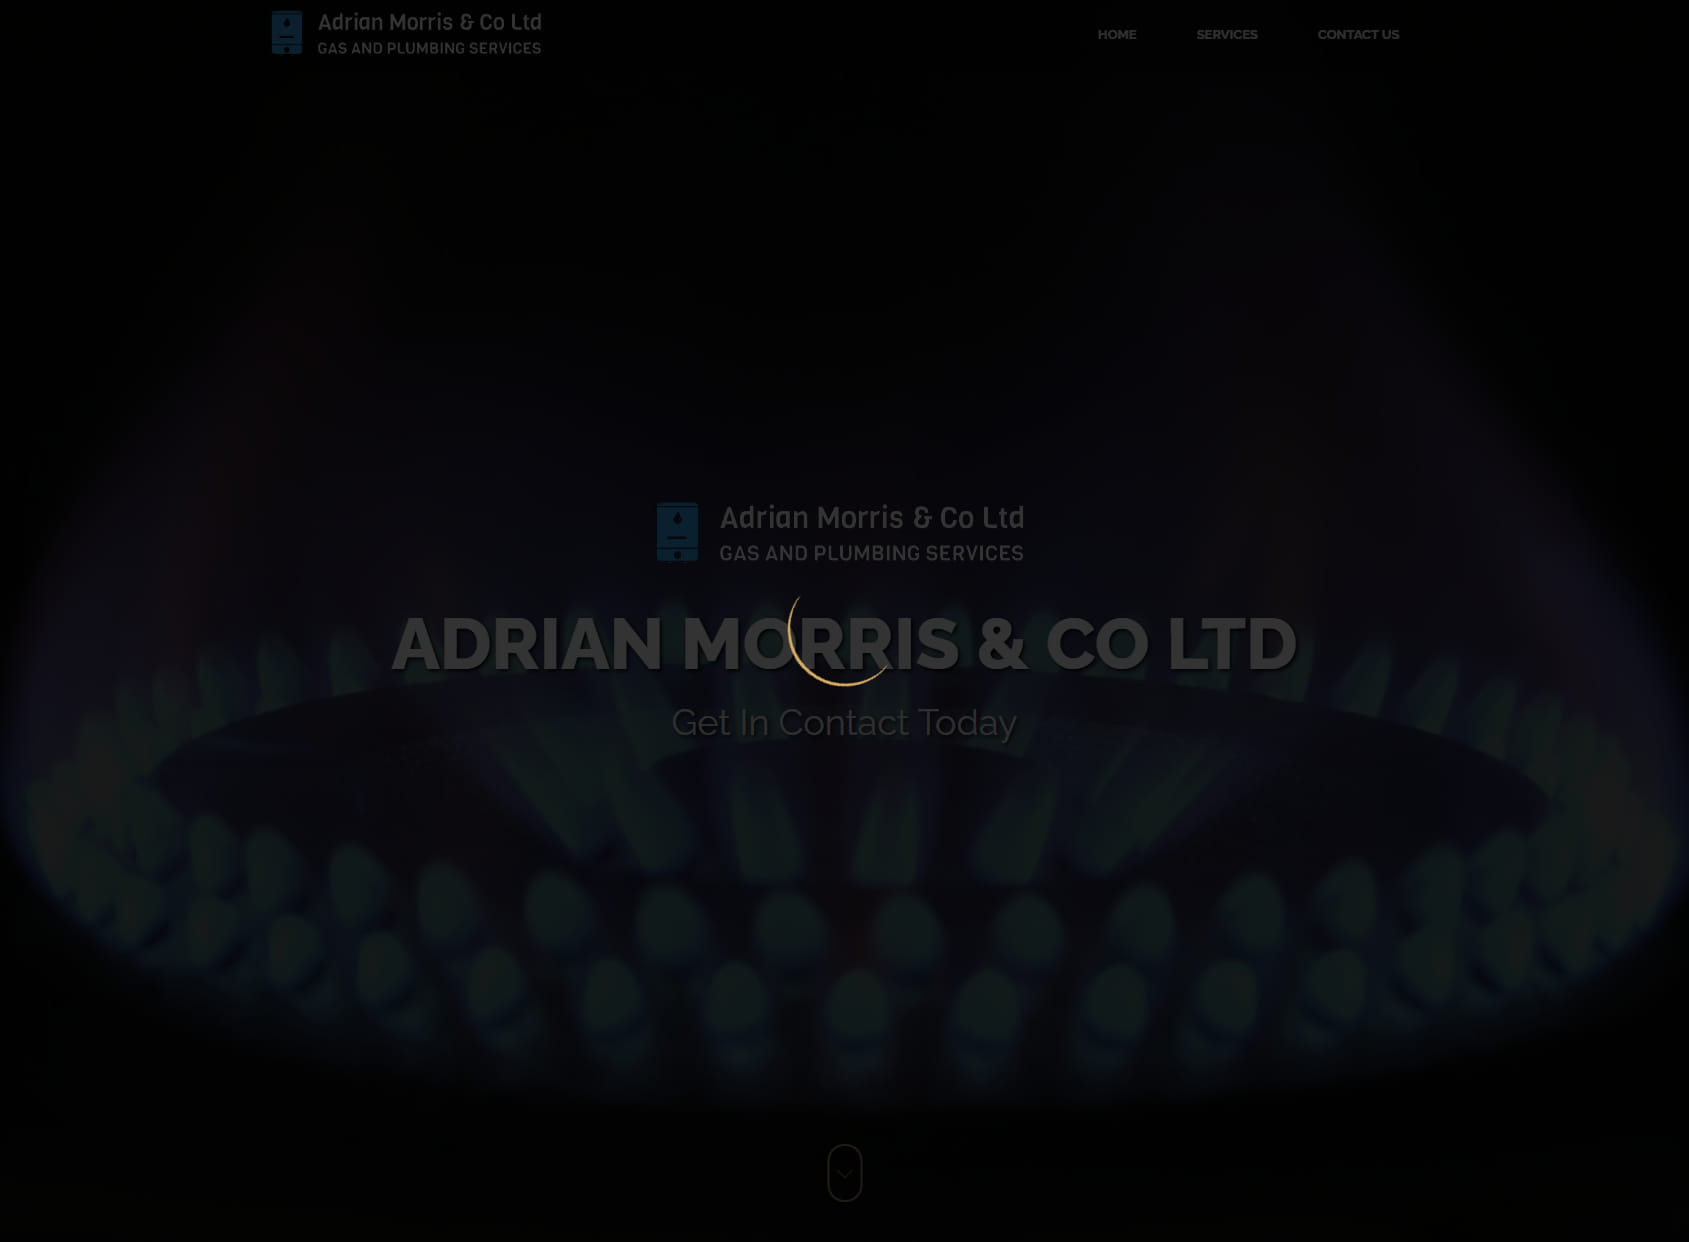 Adrian Morris & Co Ltd